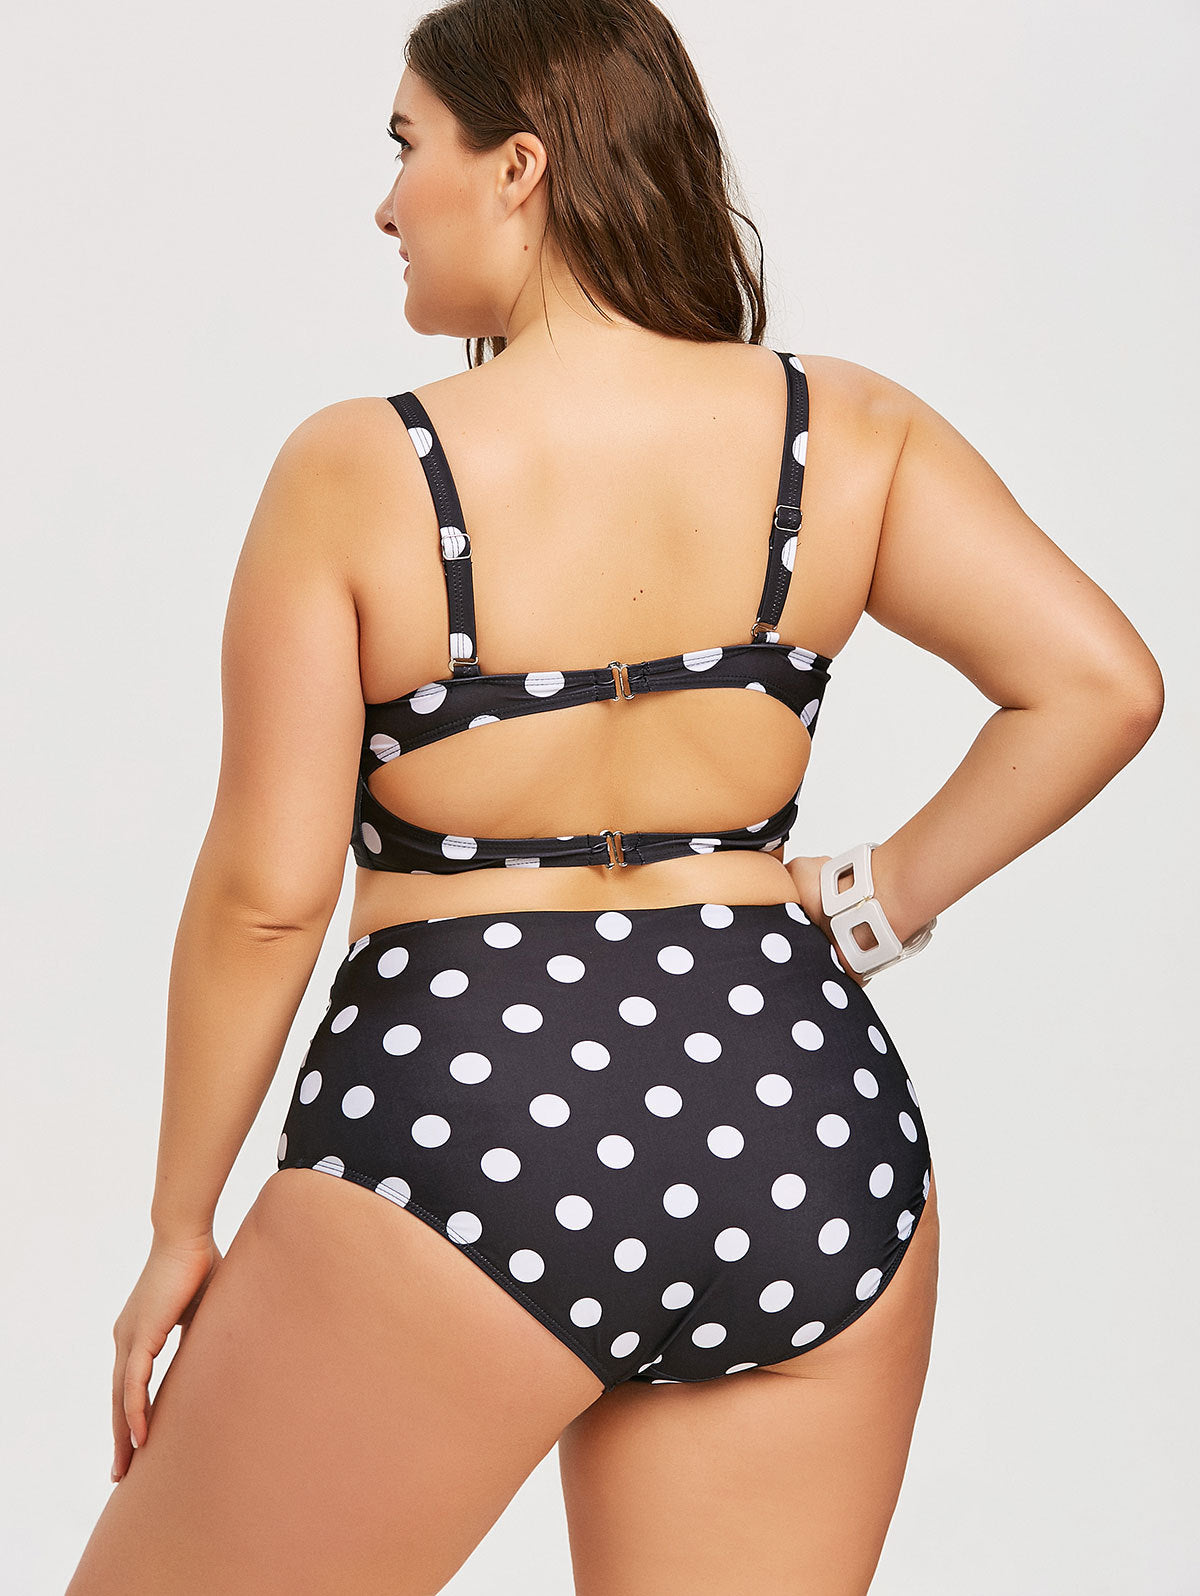 Swimsuit  | Retro Polka Dot High-rise Bikini Top Bottom Padded Swimsuit Plus Size Swimwear | |  | thecurvestory.myshopify.com